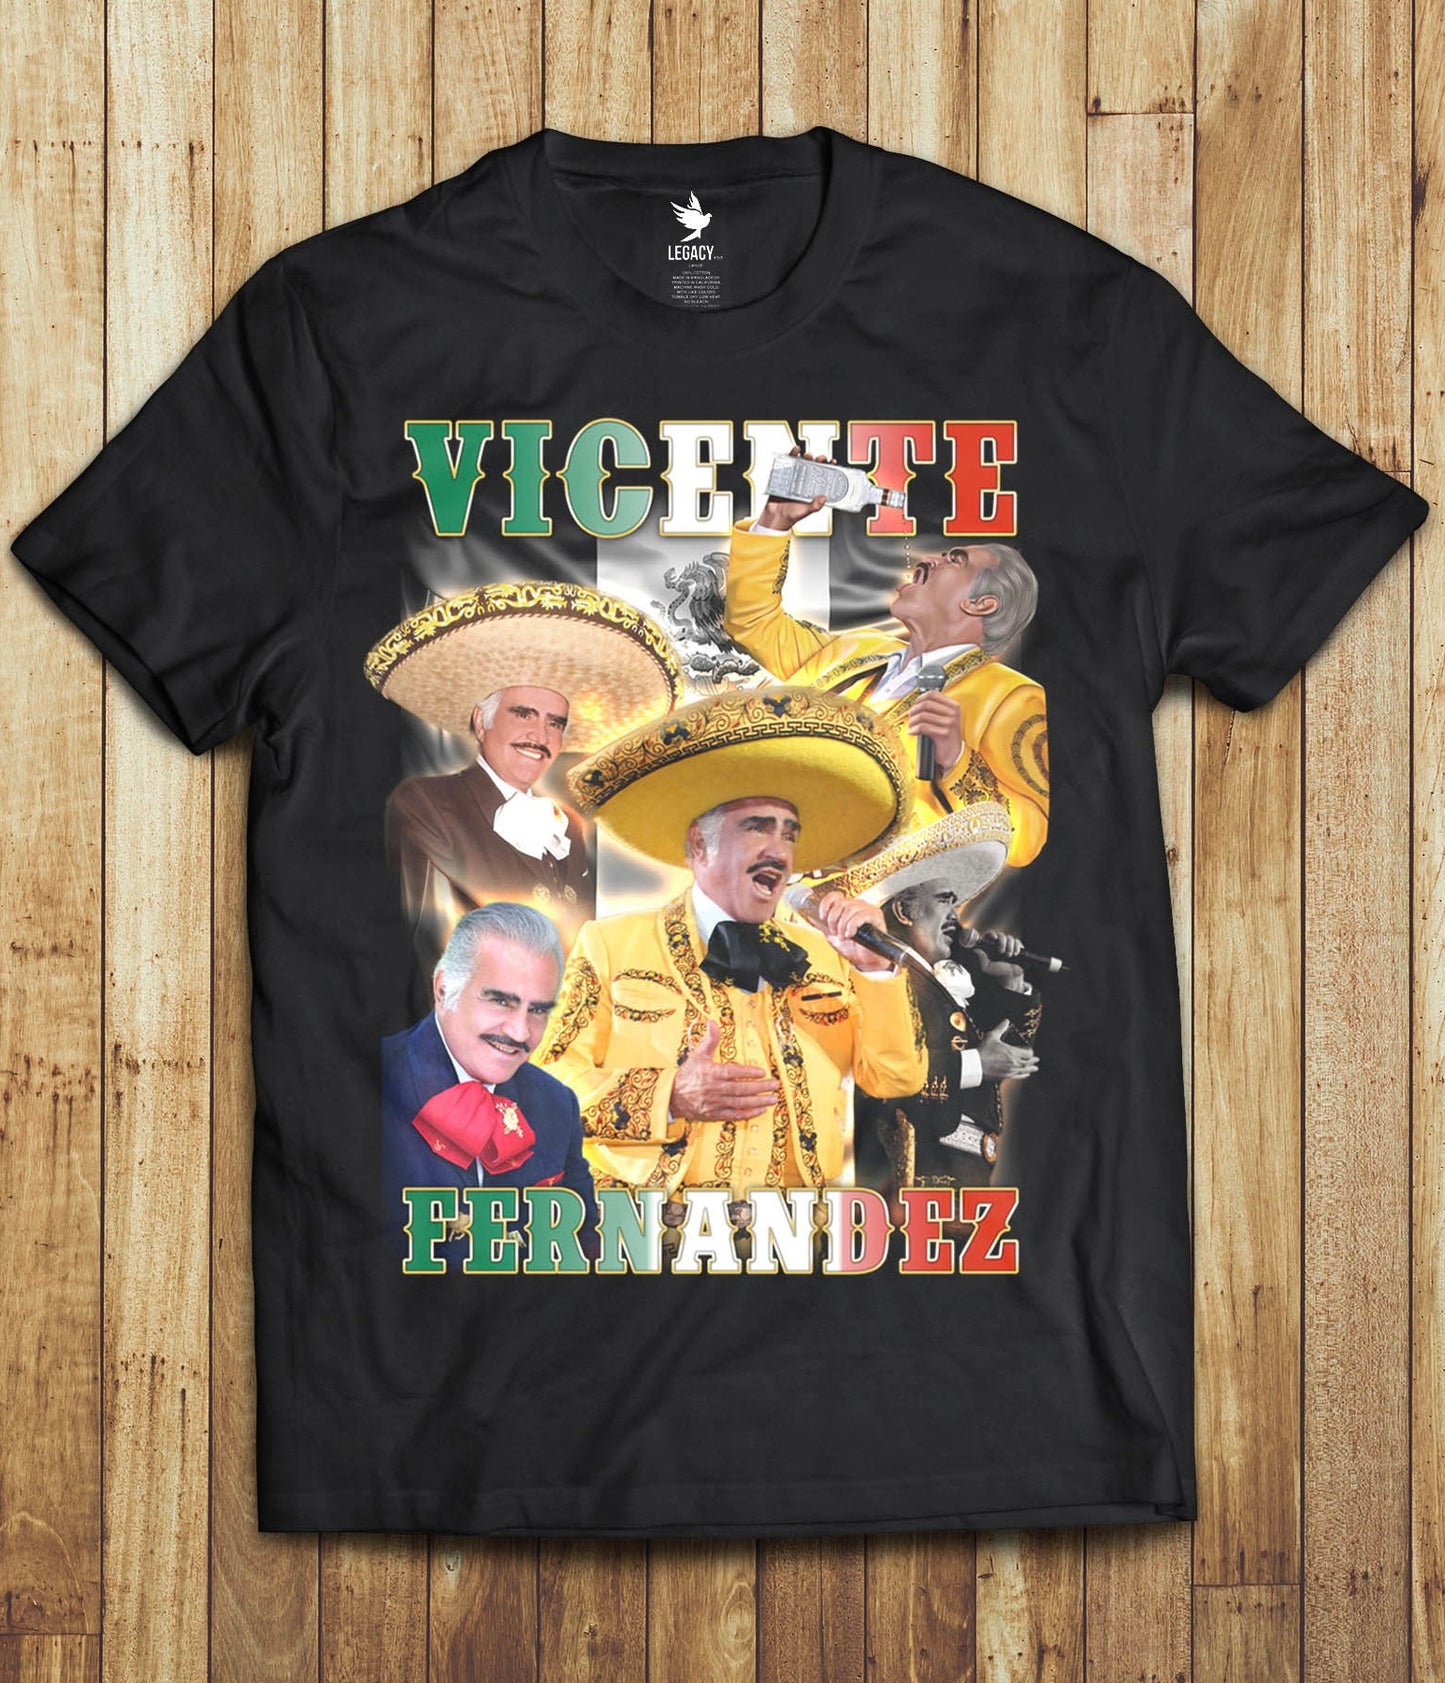 Vicente Fernandez Tribute Shirt (Black)